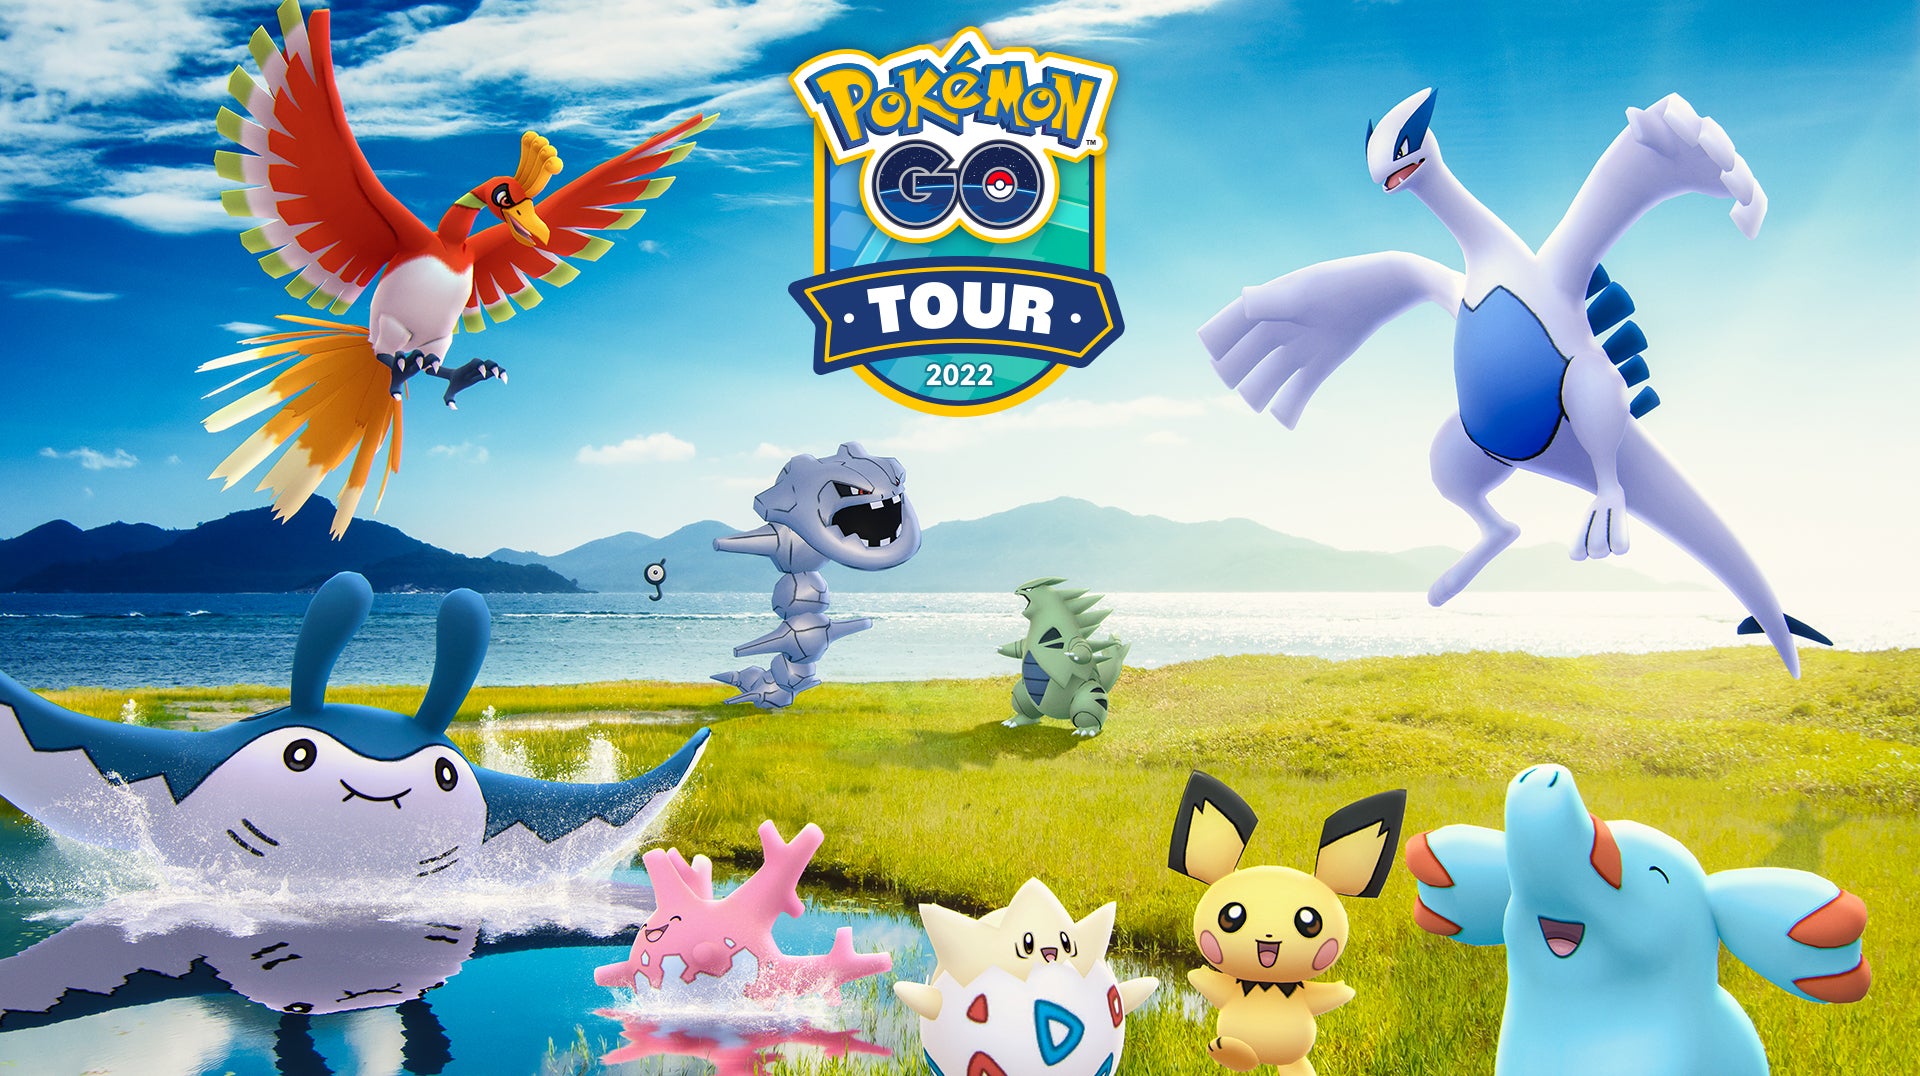 Excepcional Marcha mala disculpa Pokémon Go - Tour de Pokémon Go: Johto 2022 - fechas y horarios,  recompensas y actividades gratis | Eurogamer.es